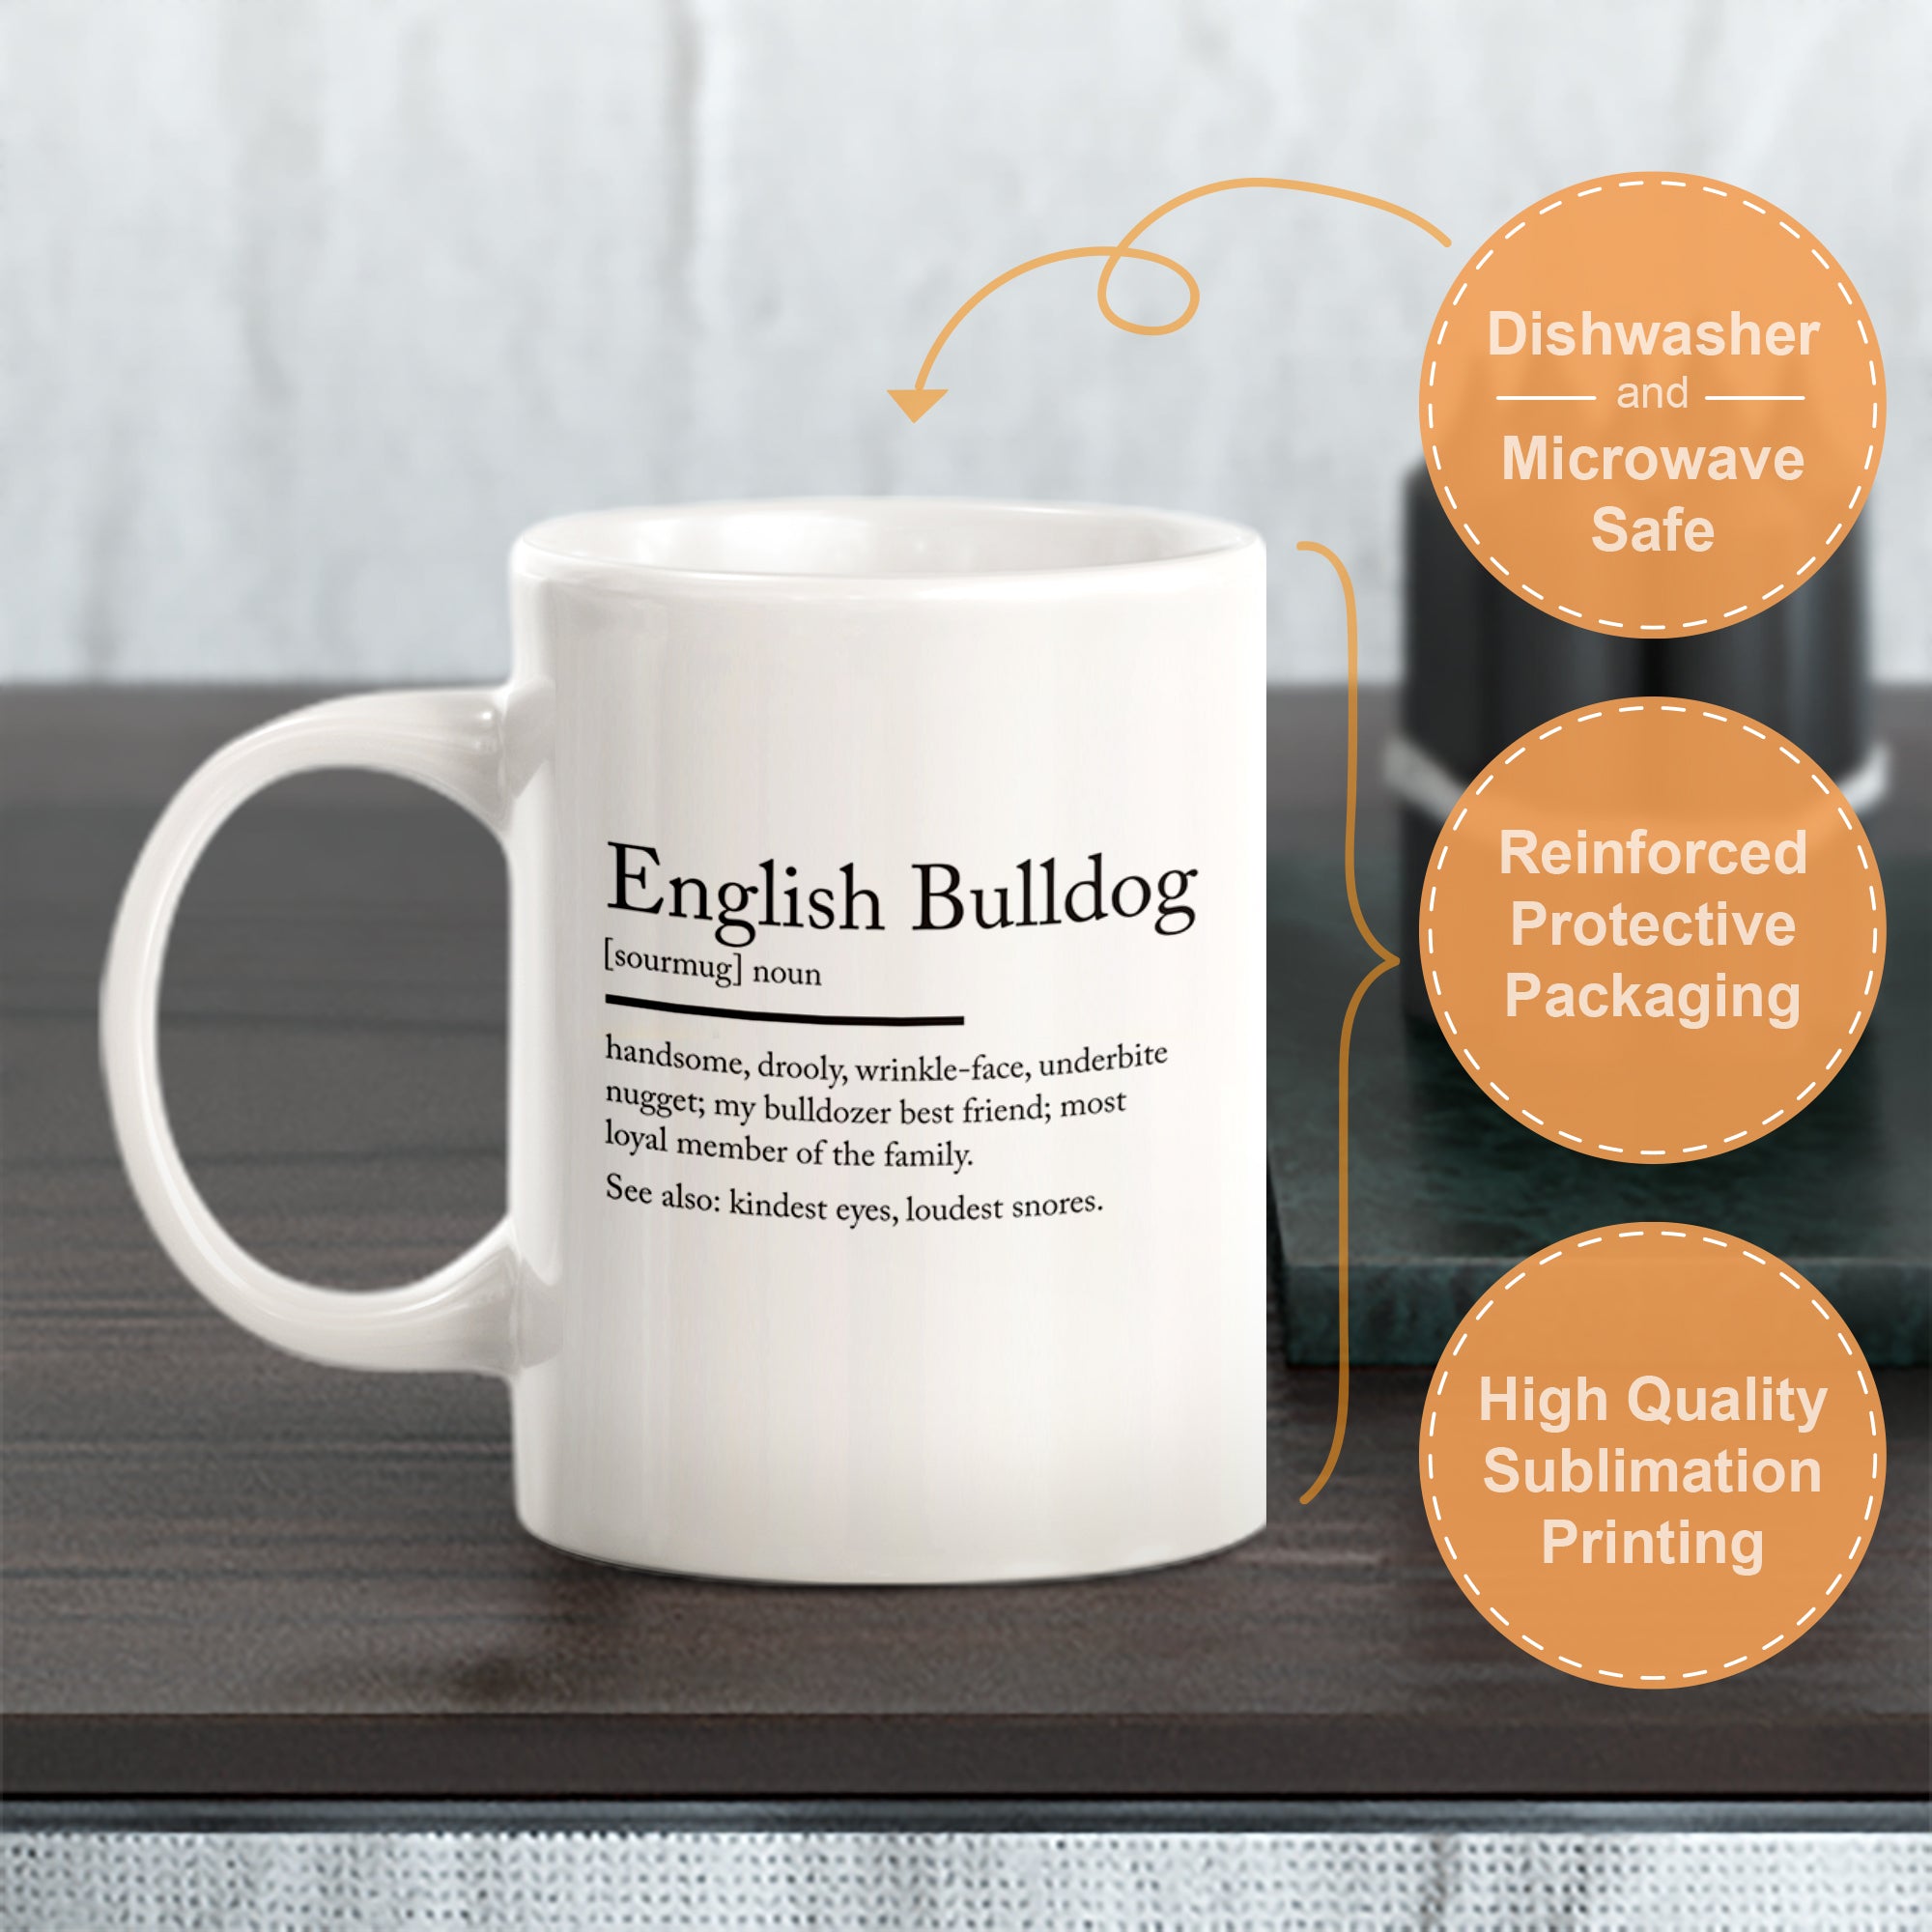 ENGLISH BULLDOG Coffee Mug